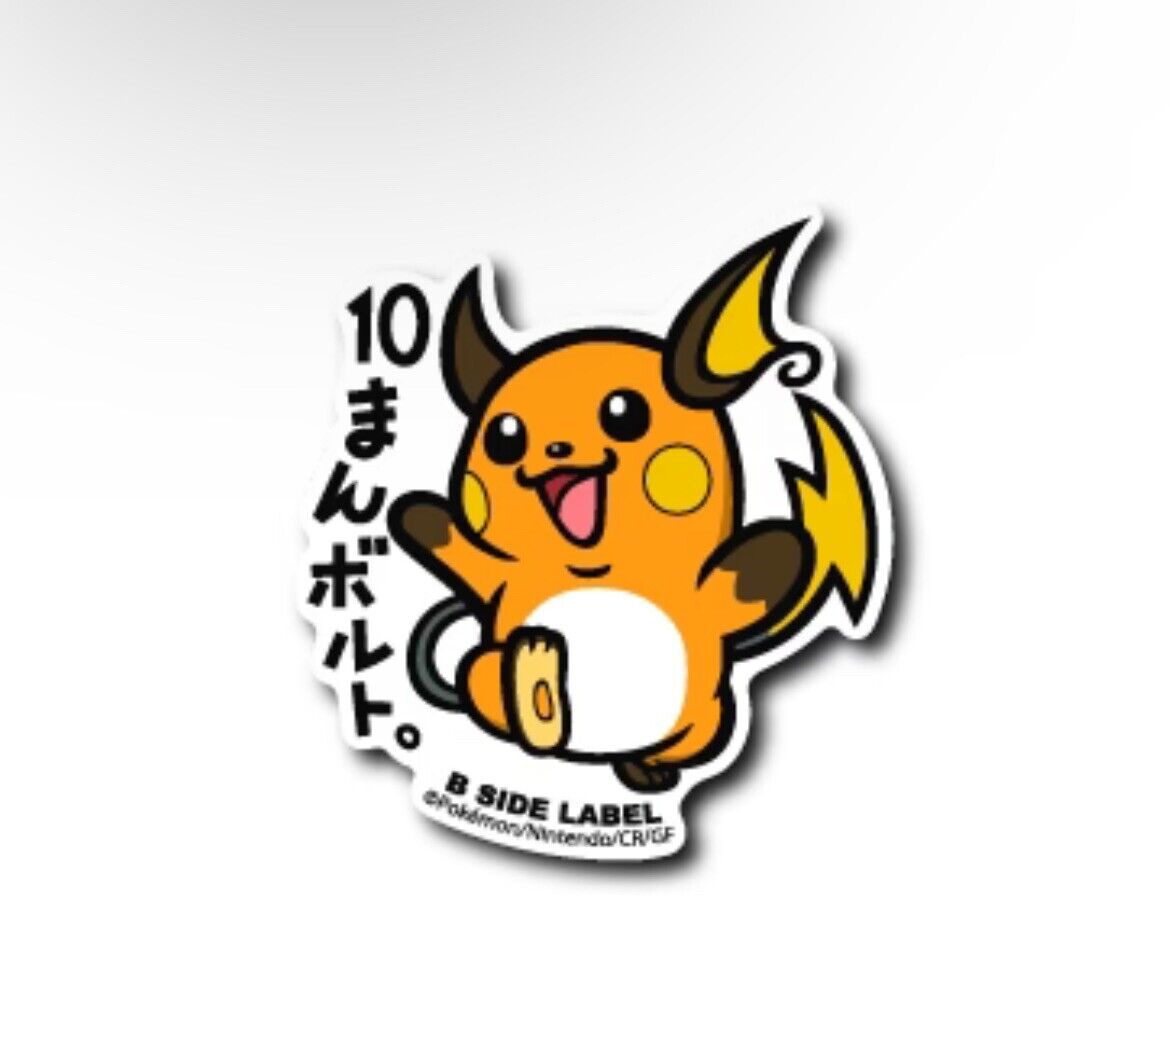 Pokemon |   Raichu 0026 Sticker B SIDE LABEL Pokemon Center Japan